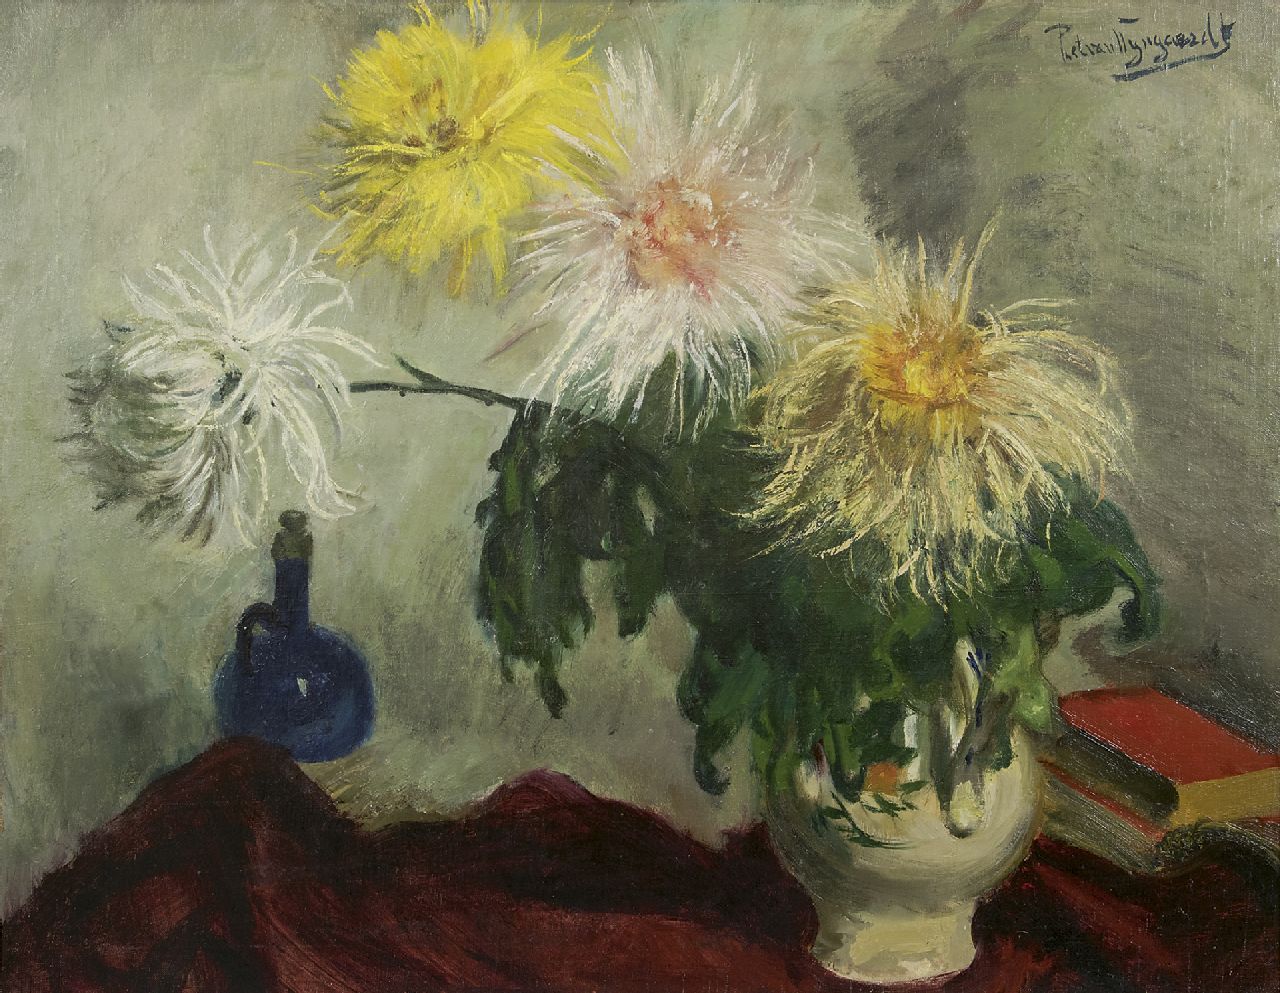 Wijngaerdt P.T. van | Petrus Theodorus 'Piet' van Wijngaerdt | Paintings offered for sale | Chrysanthemum splendor, oil on canvas 80.3 x 100.3 cm, signed u.r.